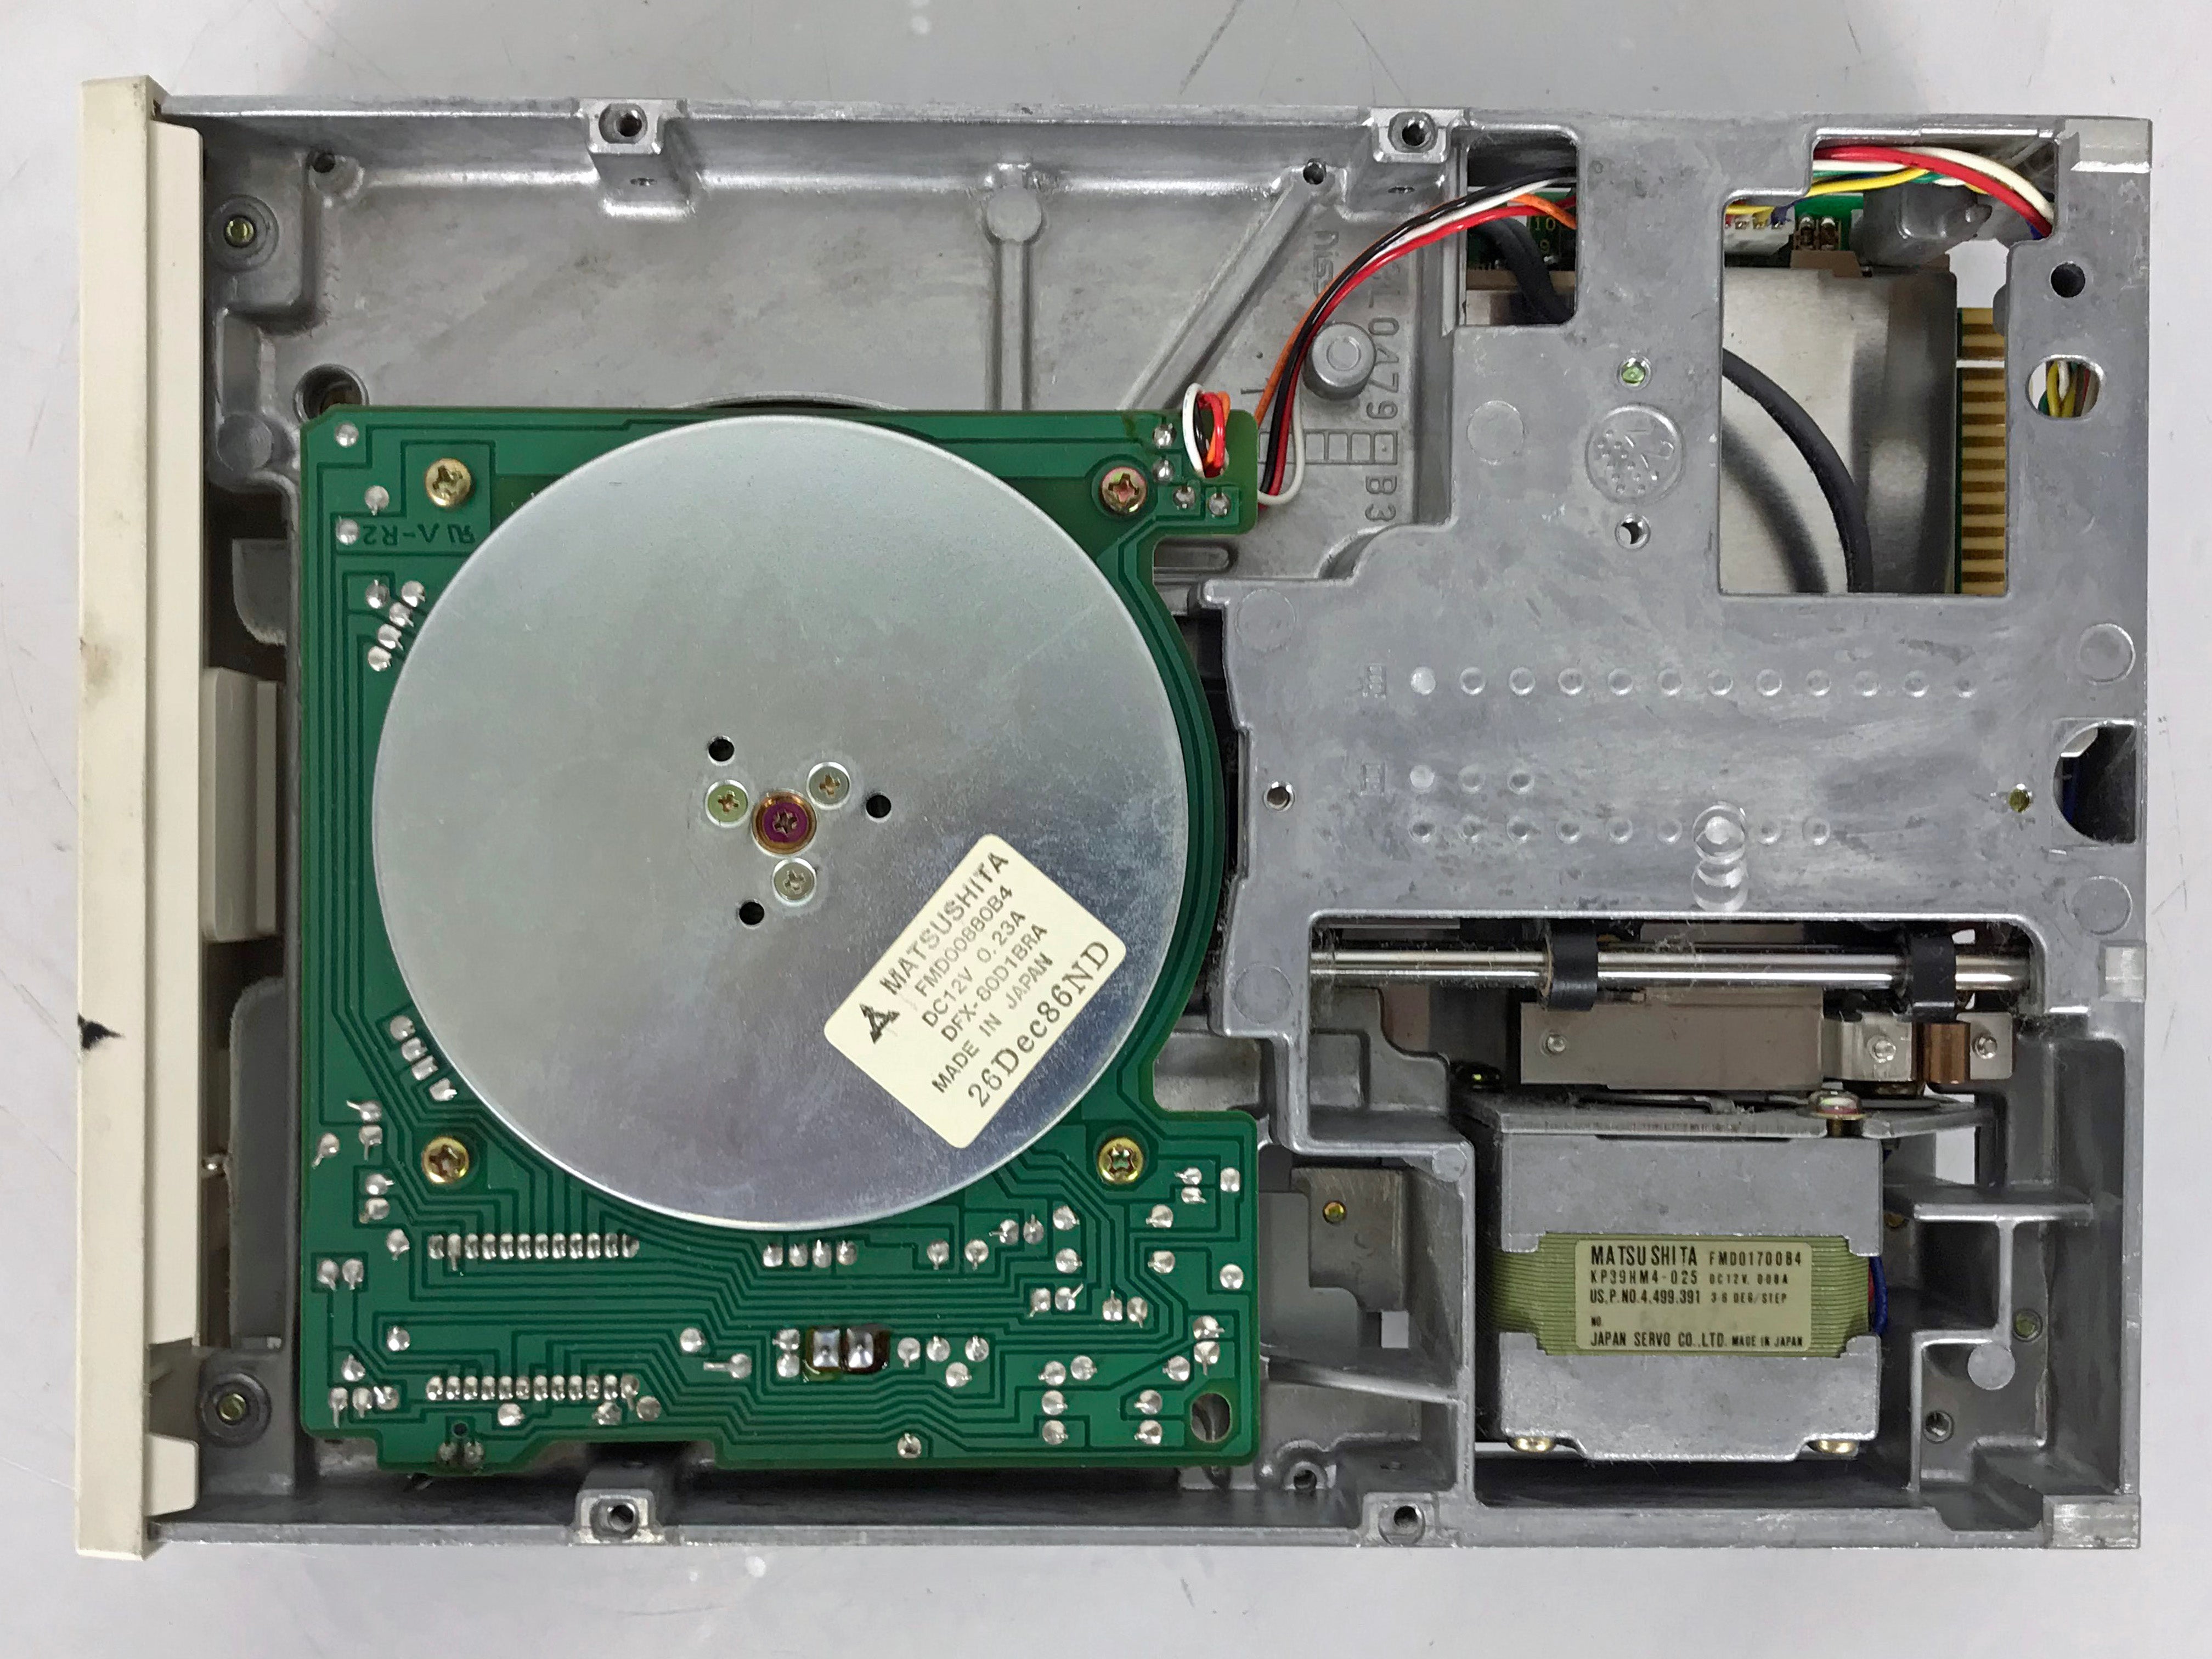 Panasonic Matsushita 5¼" JU-455-5 Floppy Disk Drive